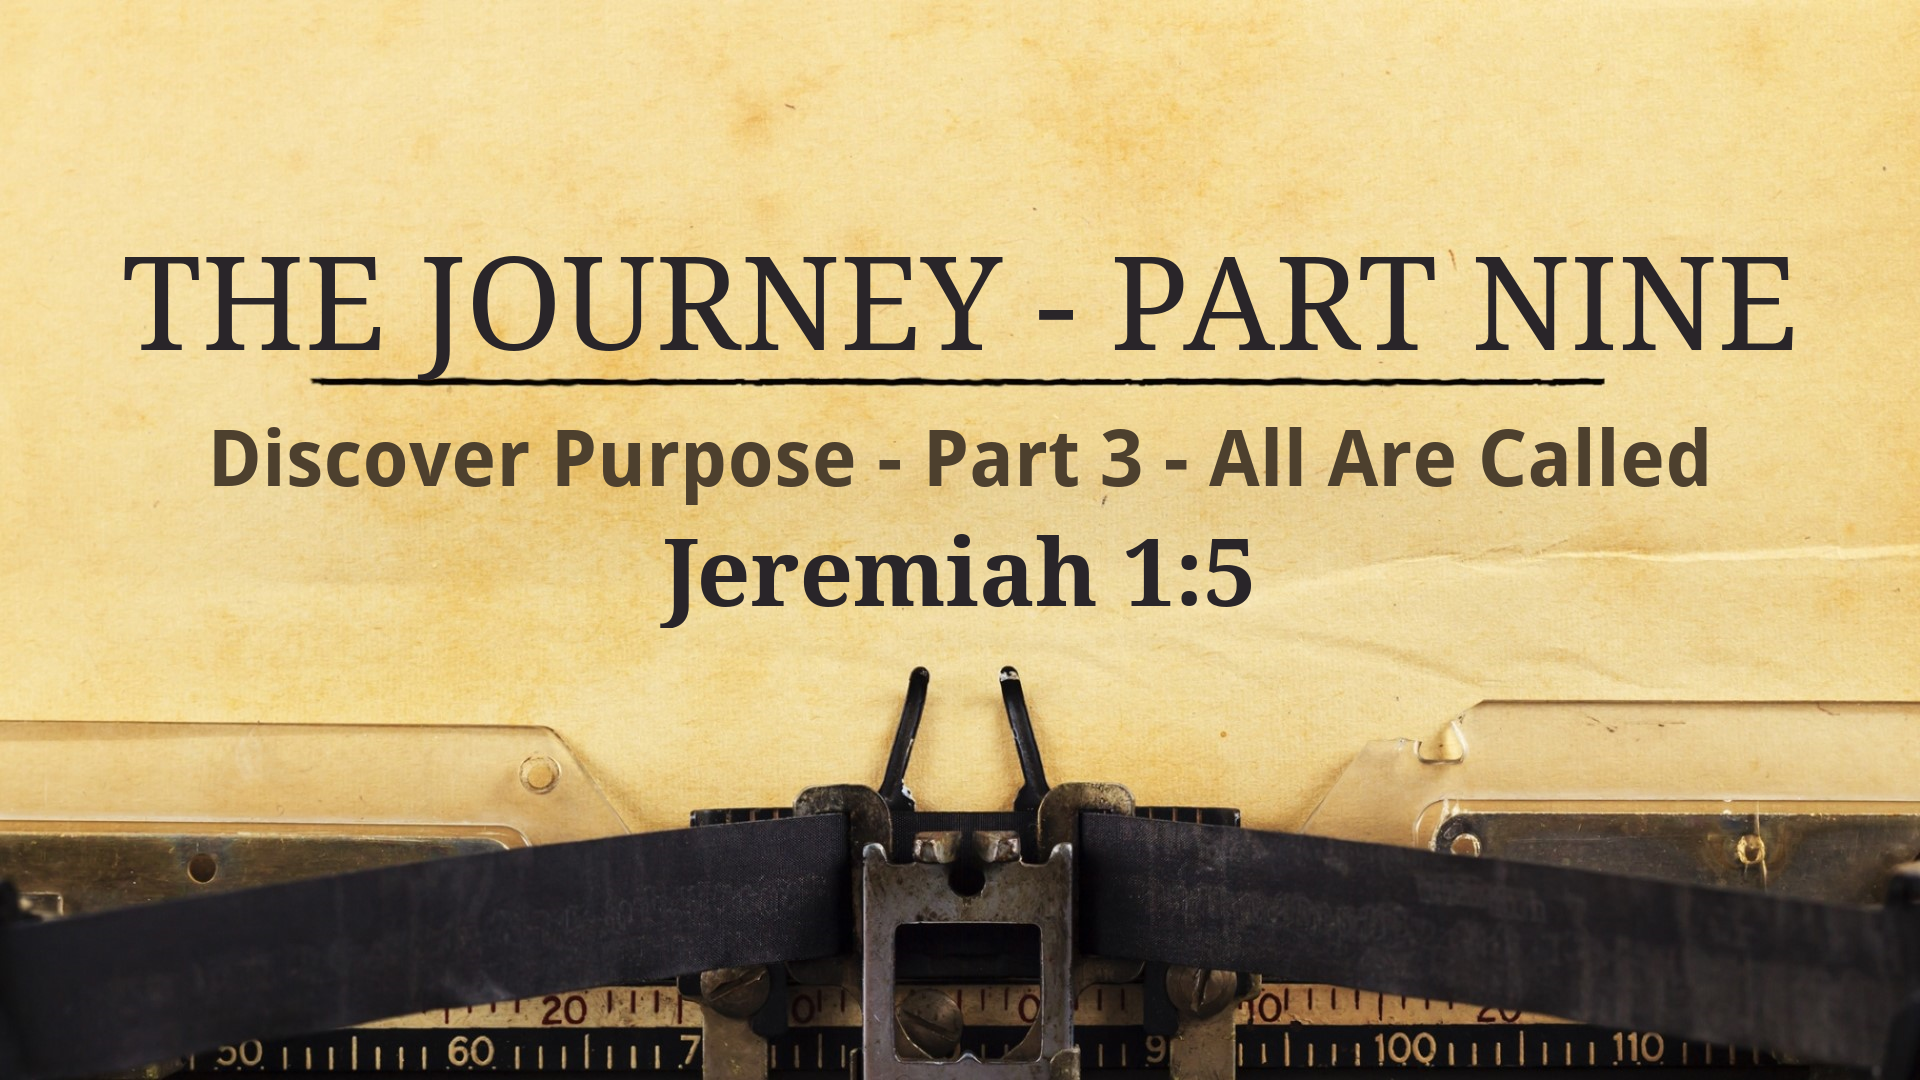 The Journey – Part 9